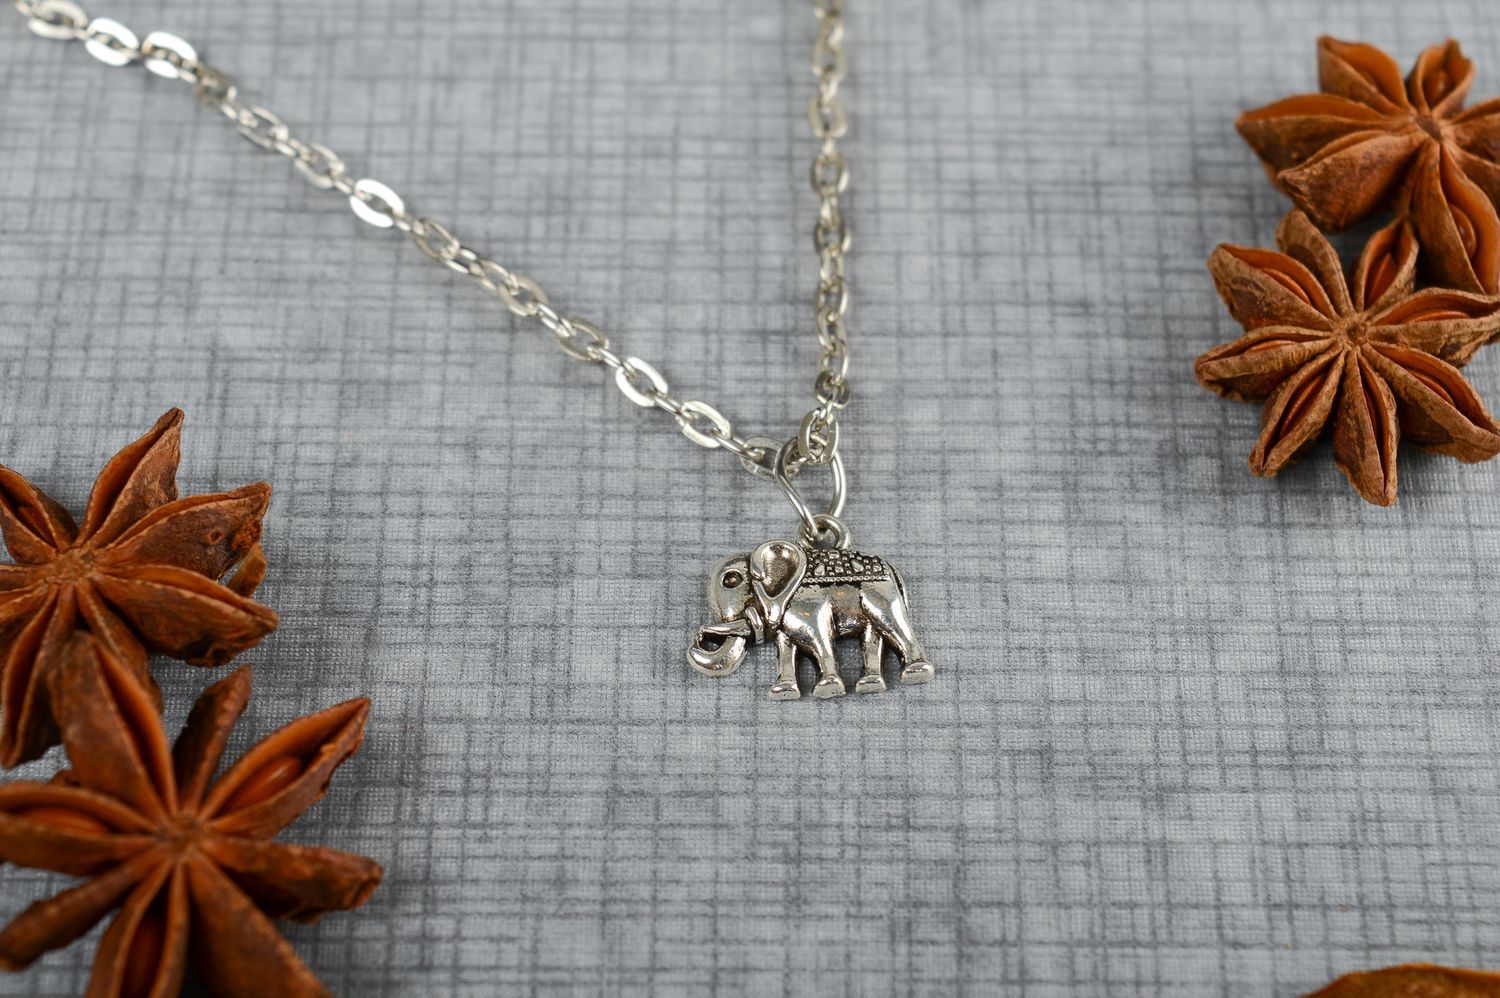 Handmade pendant little elephant metal pendant design accessories women gift photo 1